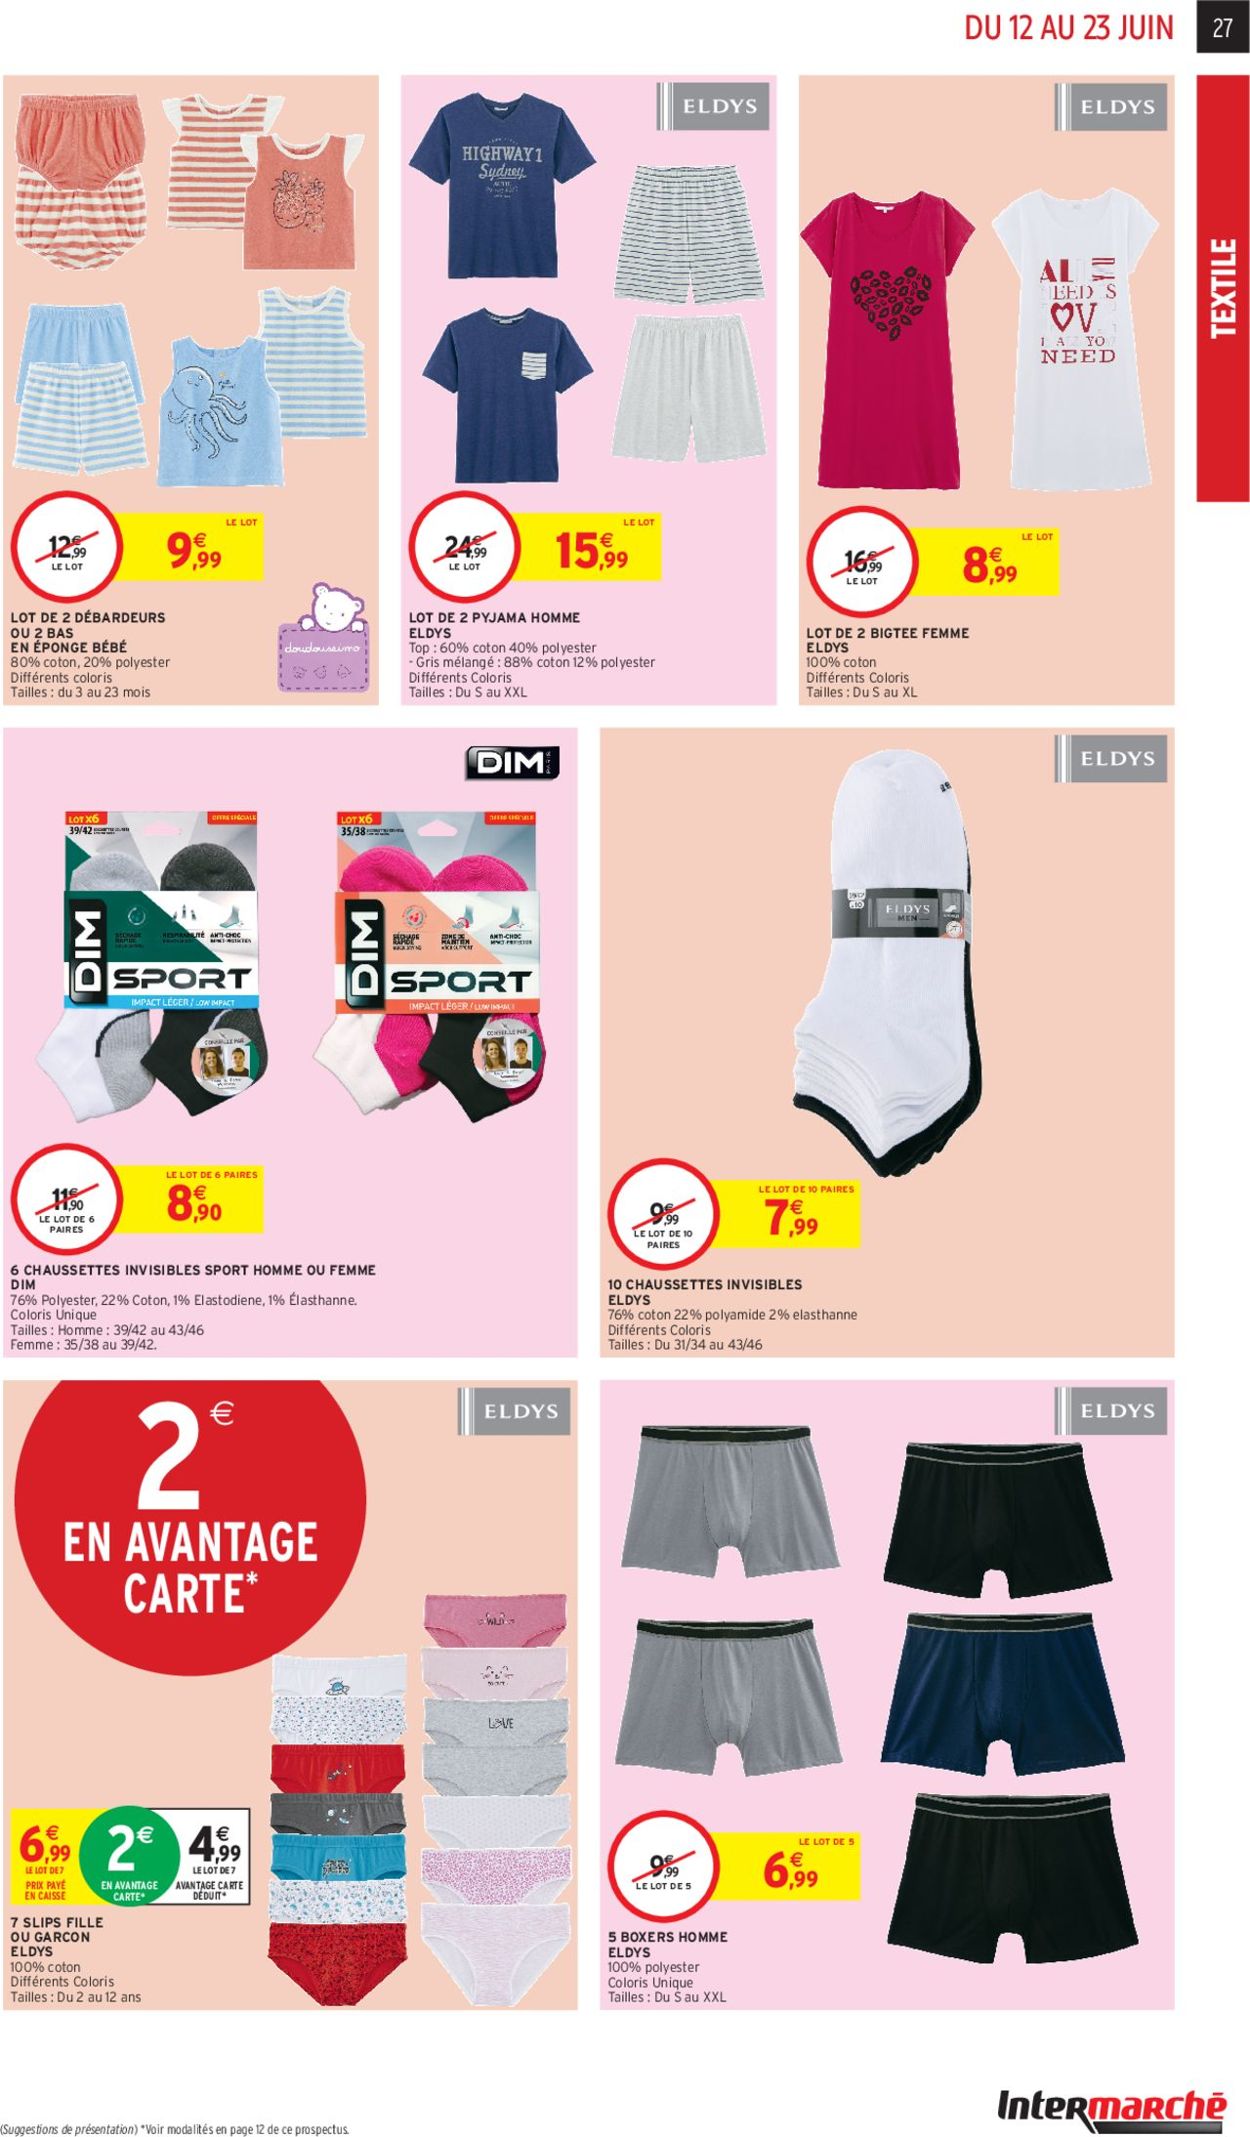 Intermarché Catalogue - 12.06-23.06.2019 (Page 27)